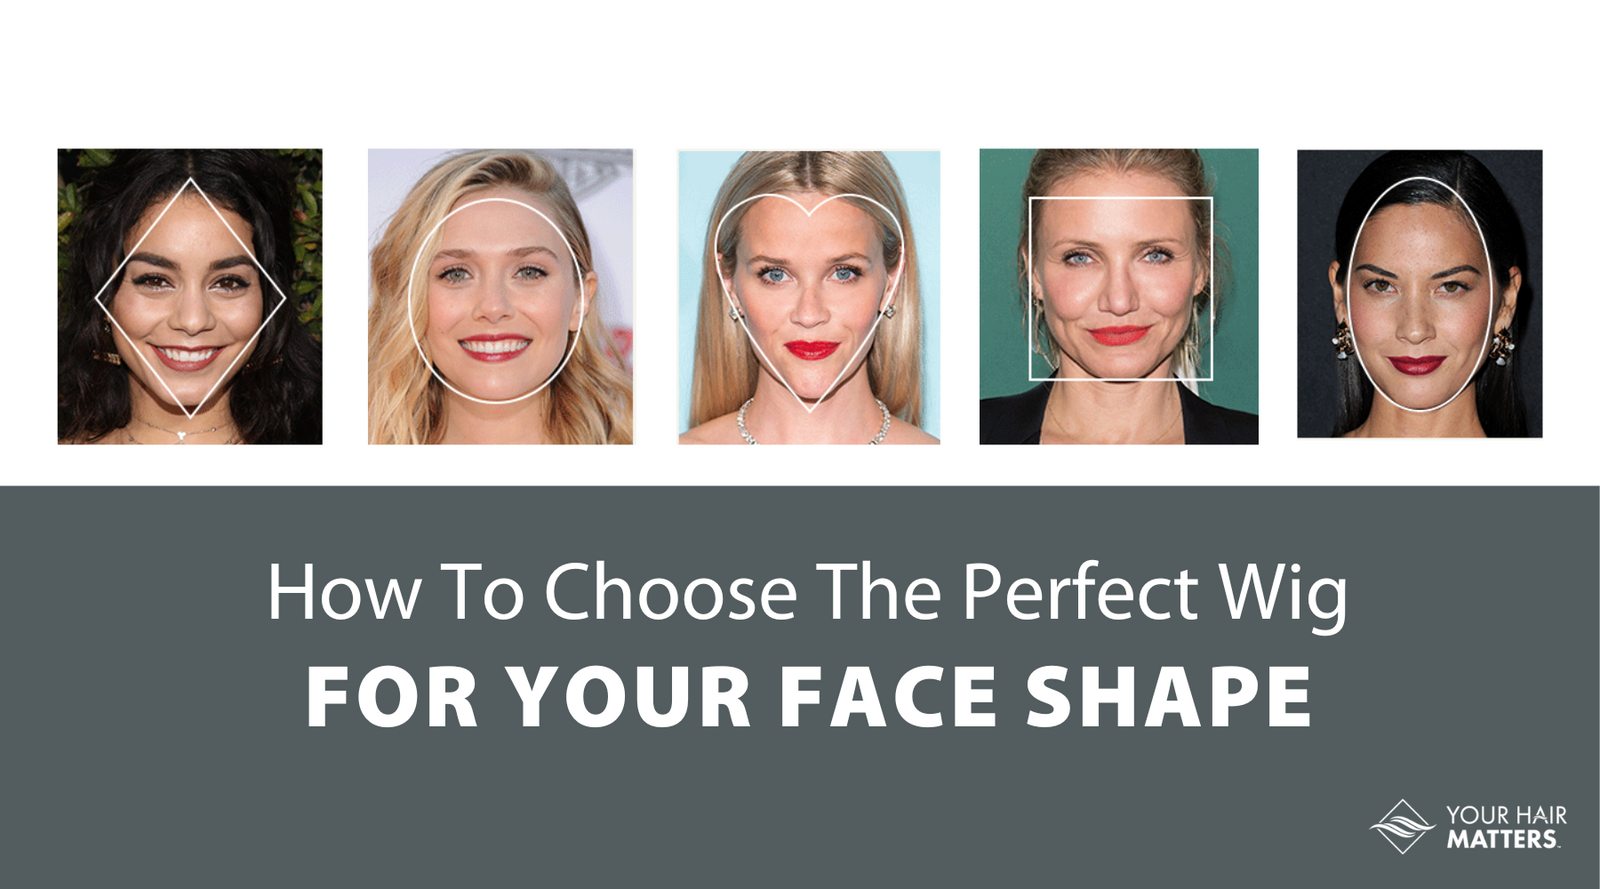 AI Face Shape Detector & Face Analyzer: Discover Face Shapes & Age